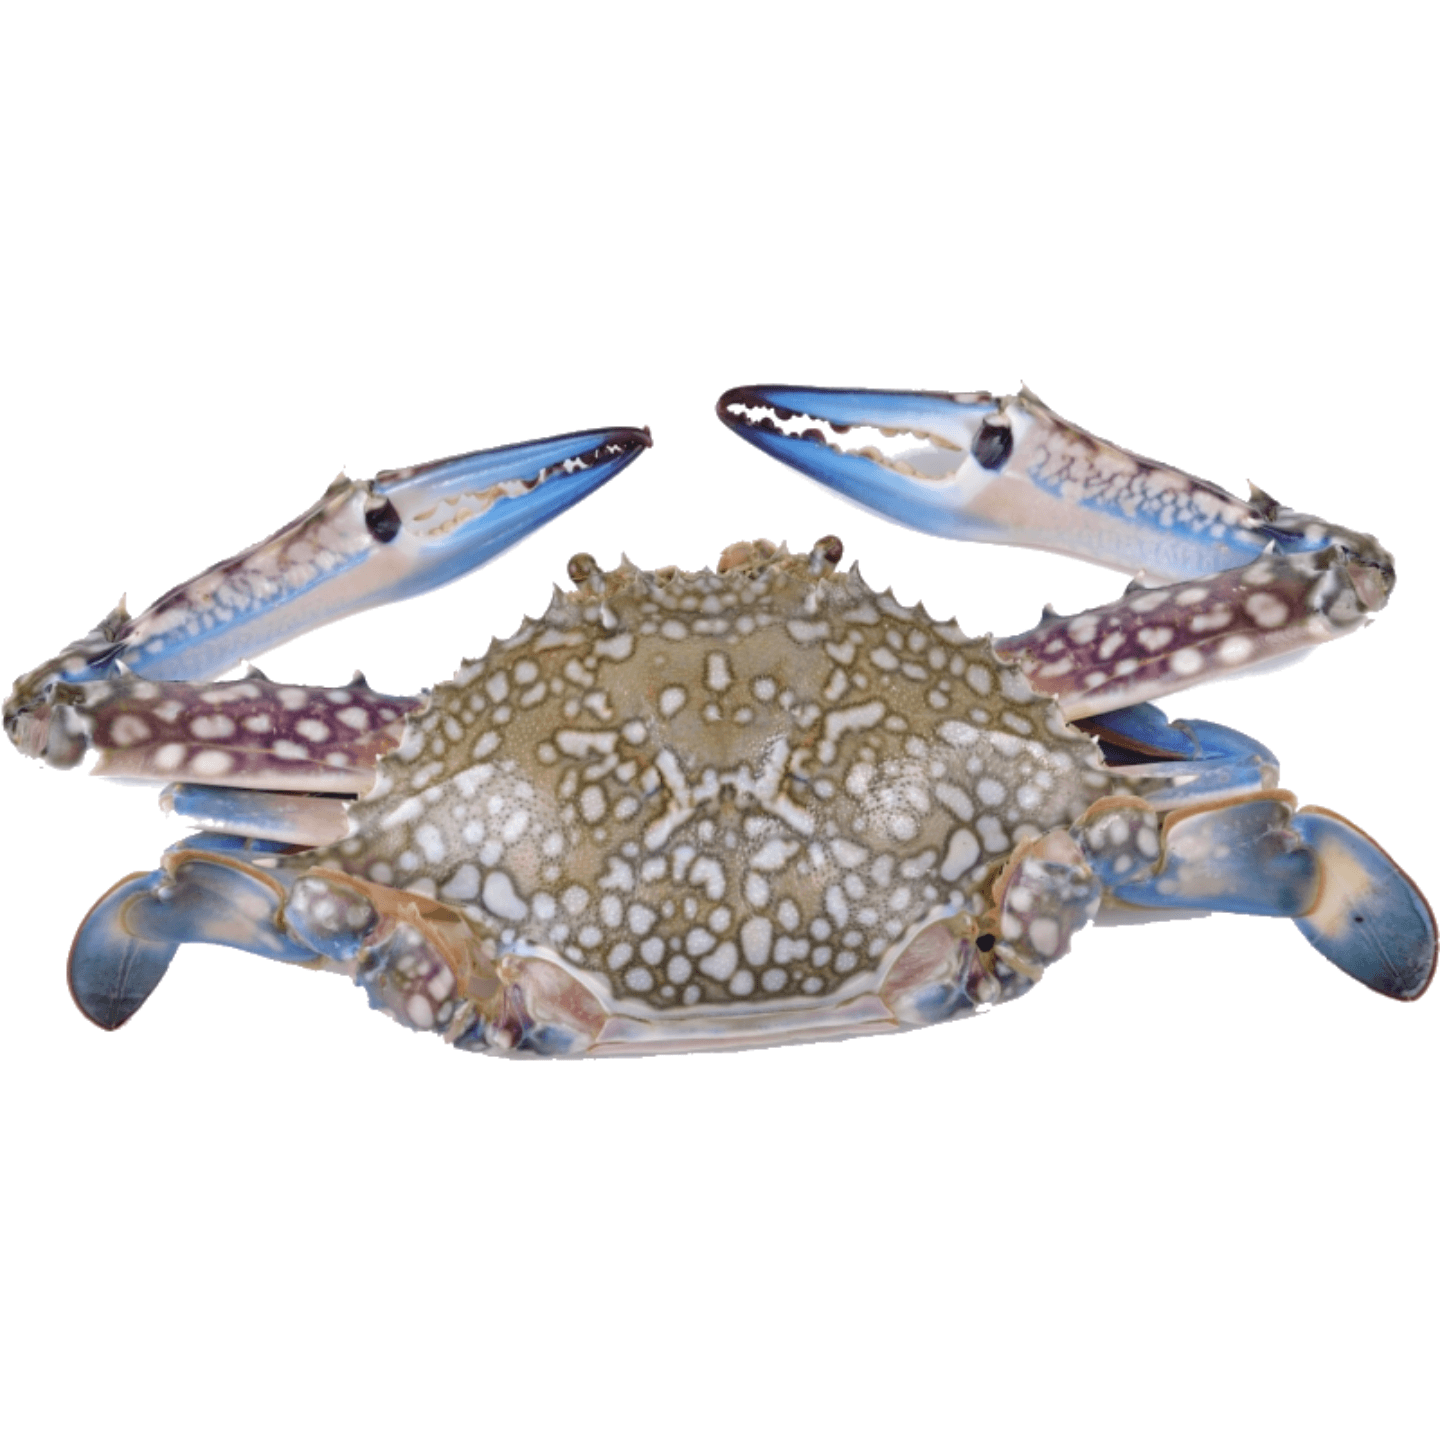 Flower Crab Med-Large 4-5pcs - 1kg seasonal